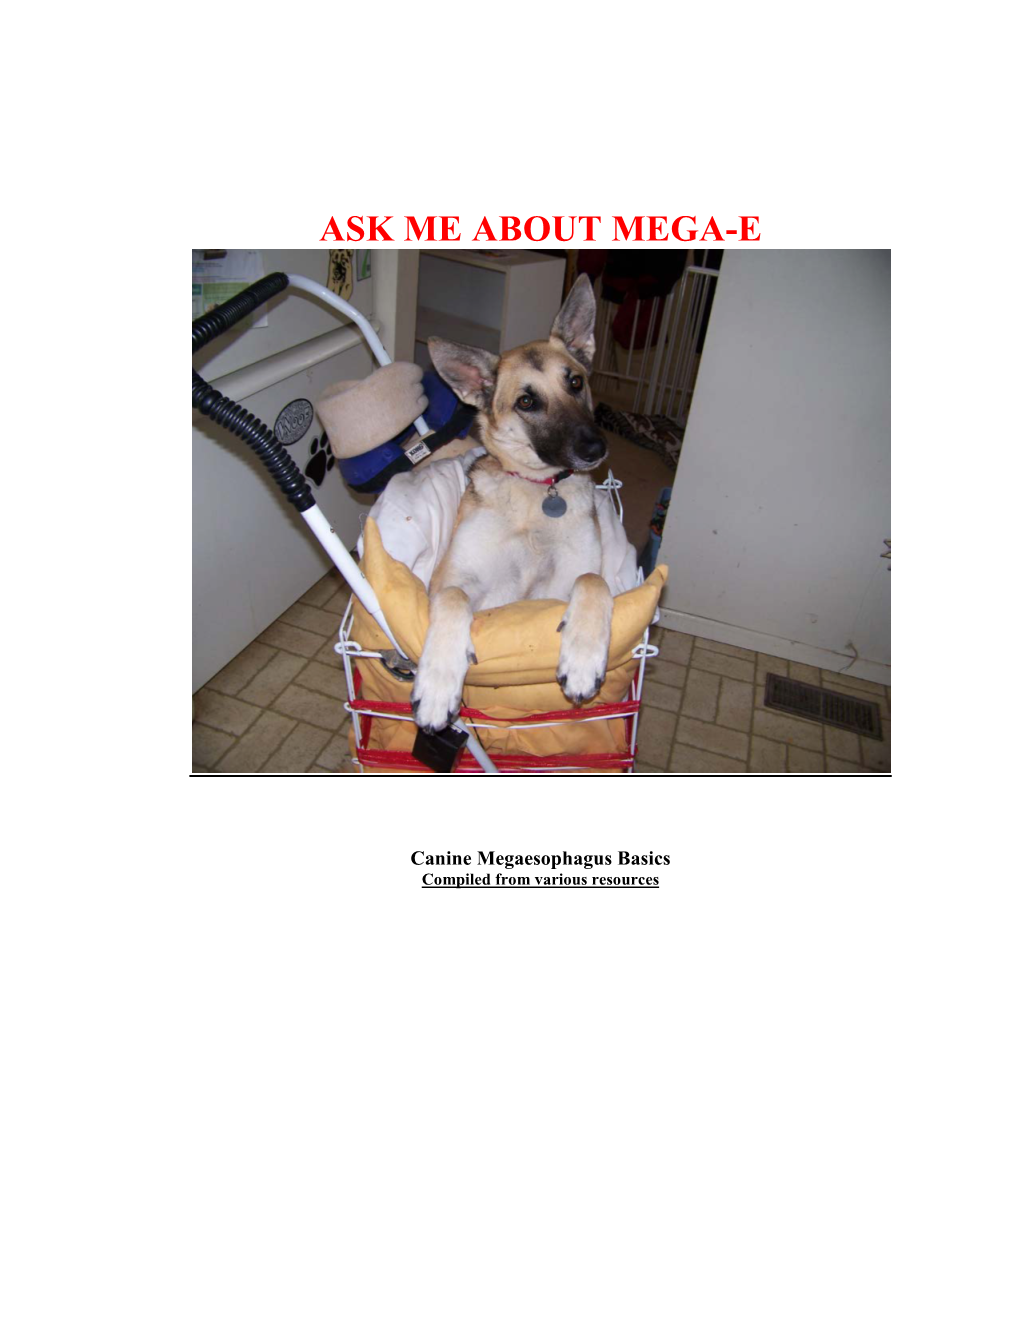 Canine Megaesophagus Basics Compiled from Various Resources CANINE MEGAESOPHAGUS BASICS